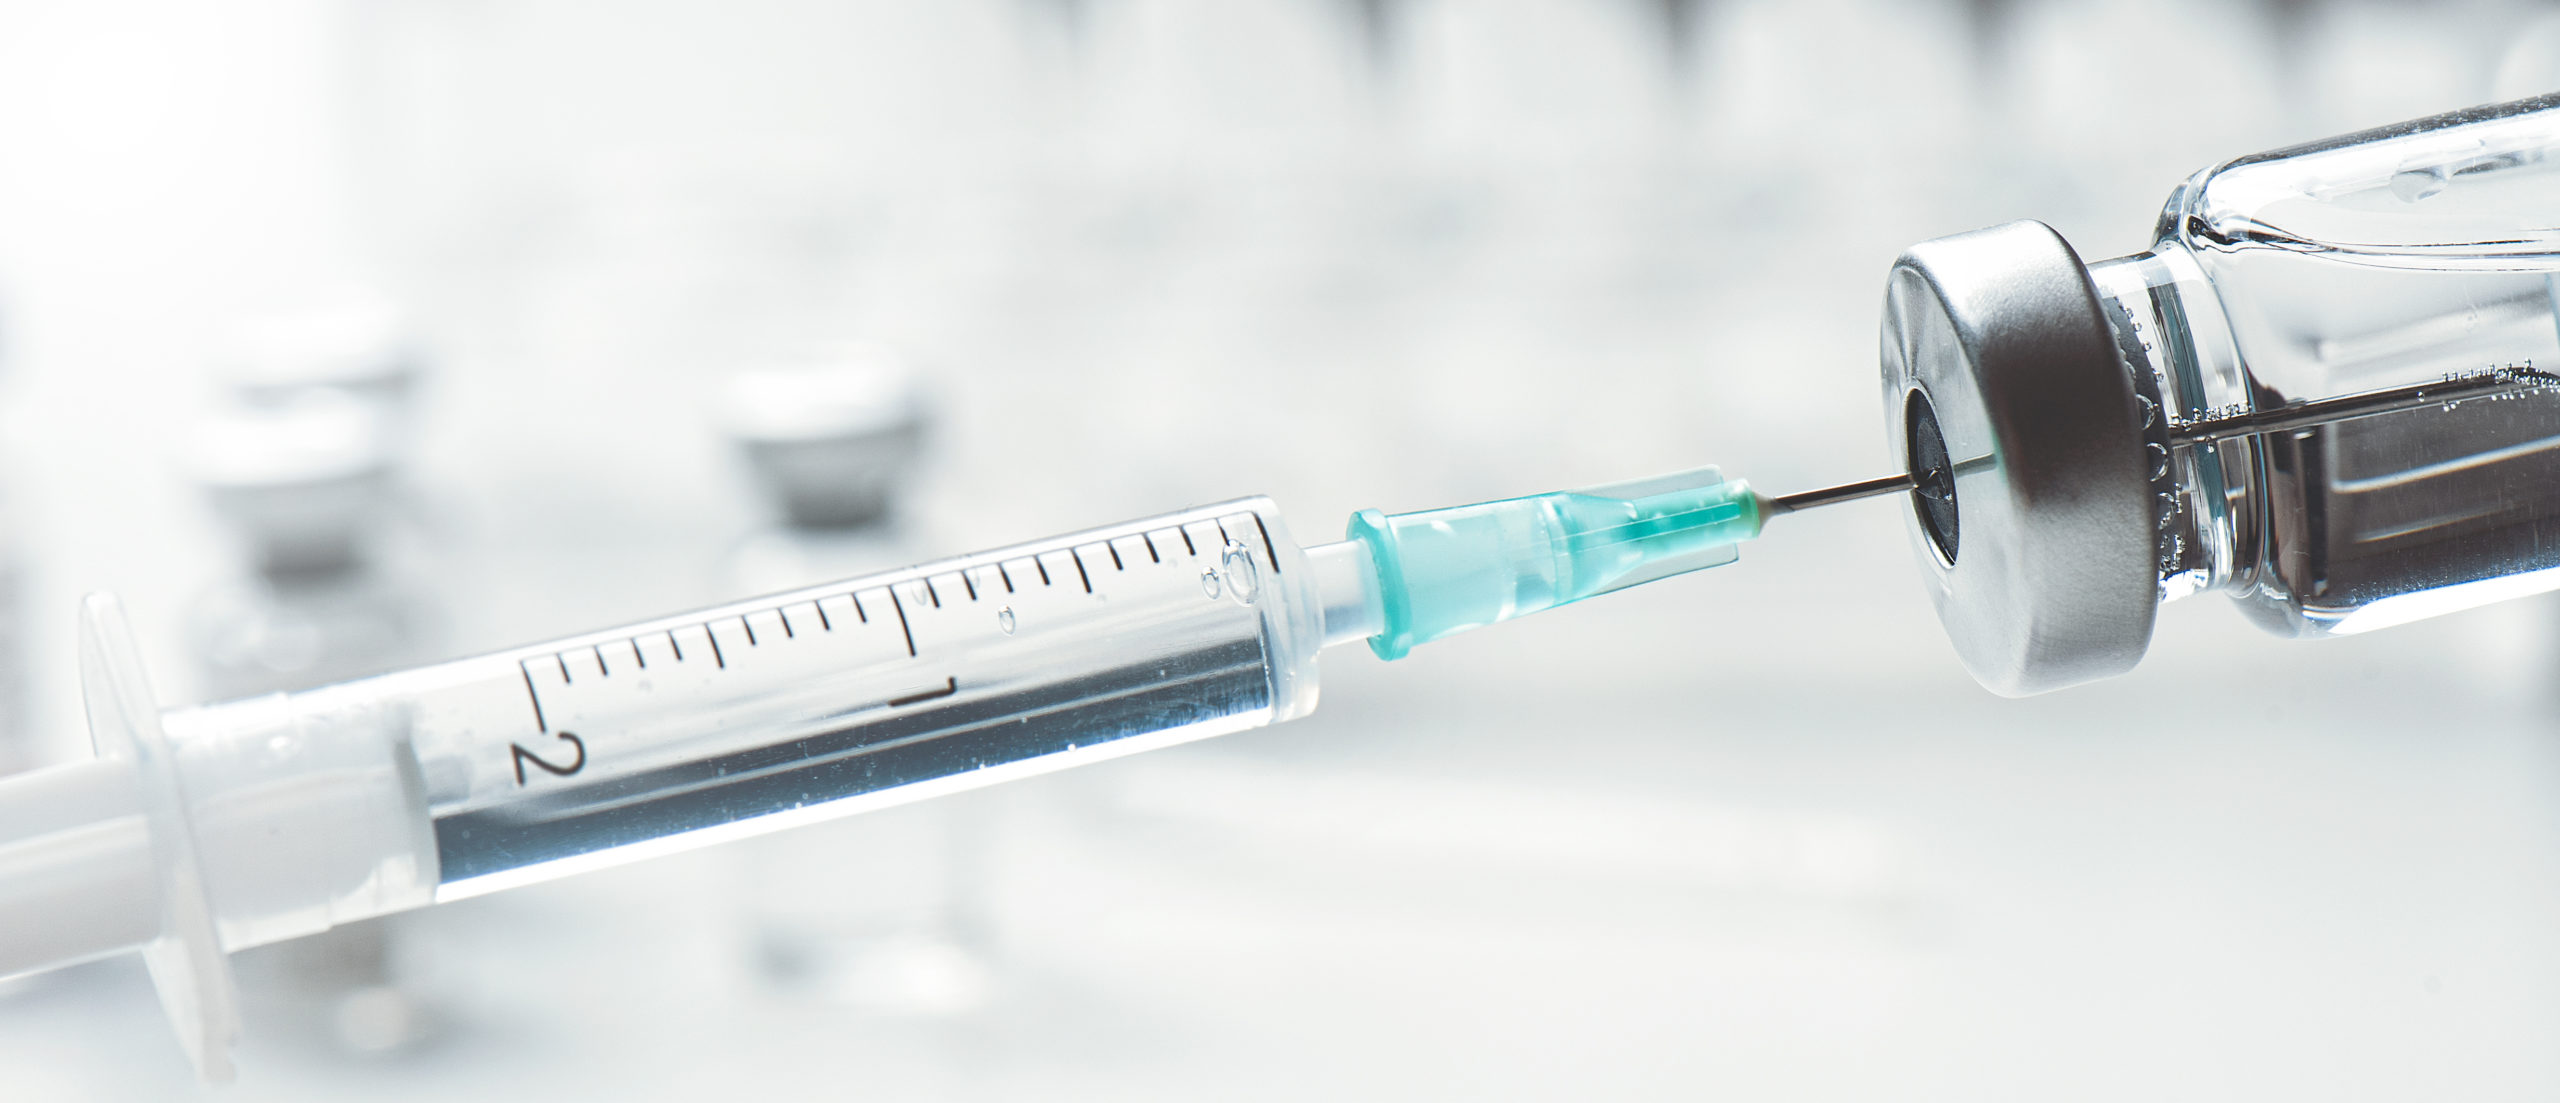 Vaccine bottle and syringe. Influenza, flu, corona virus vaccine concept